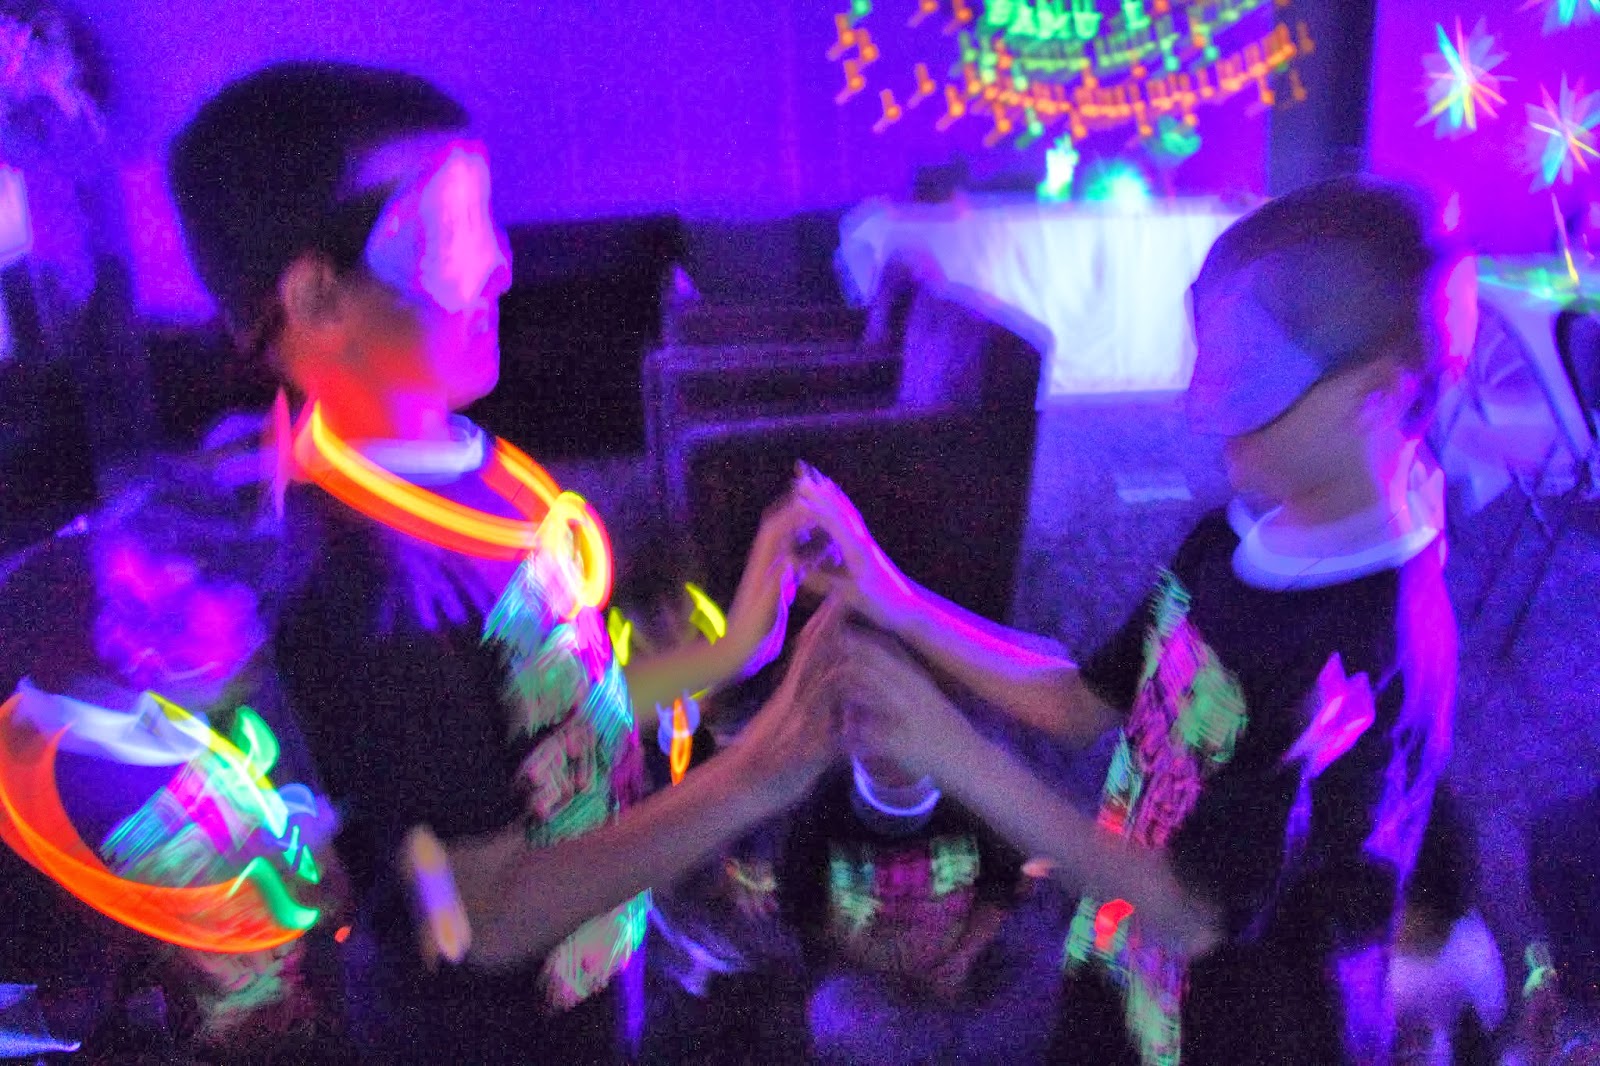 THREElittleBIRDS Events: Neon/Glow in the Dark Birthday Party